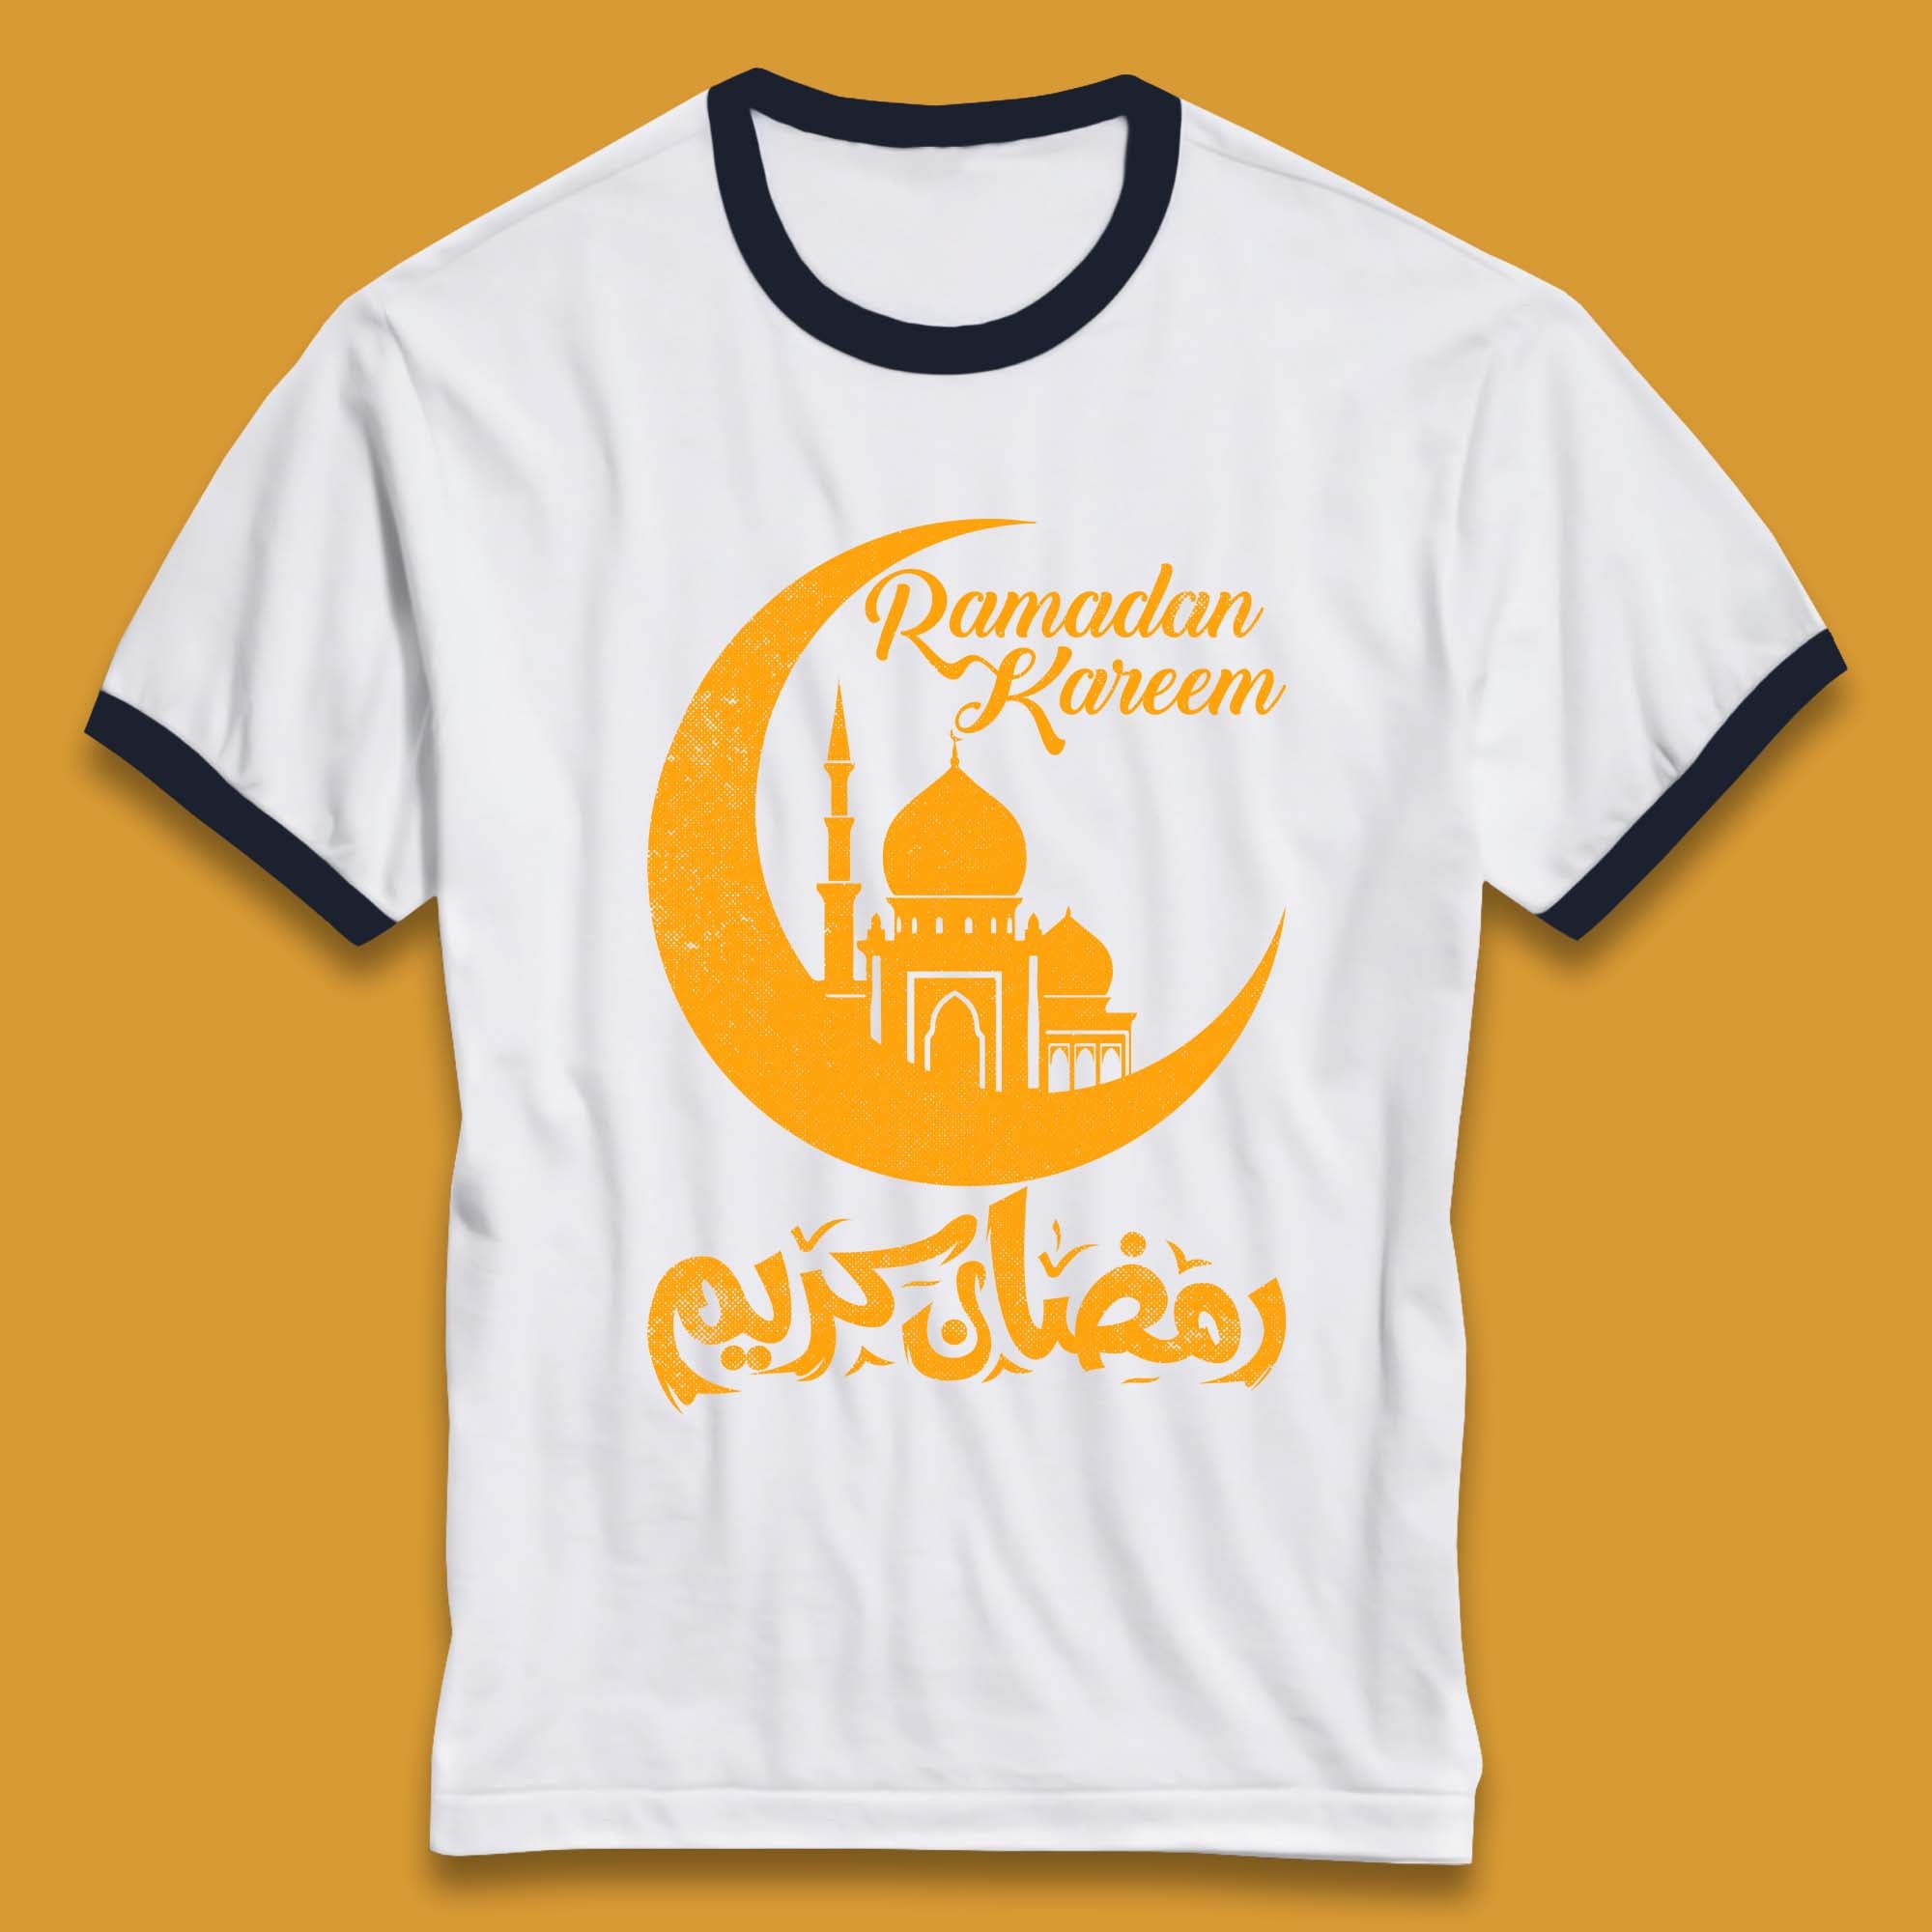 Ramadan Kareem Ringer T-Shirt